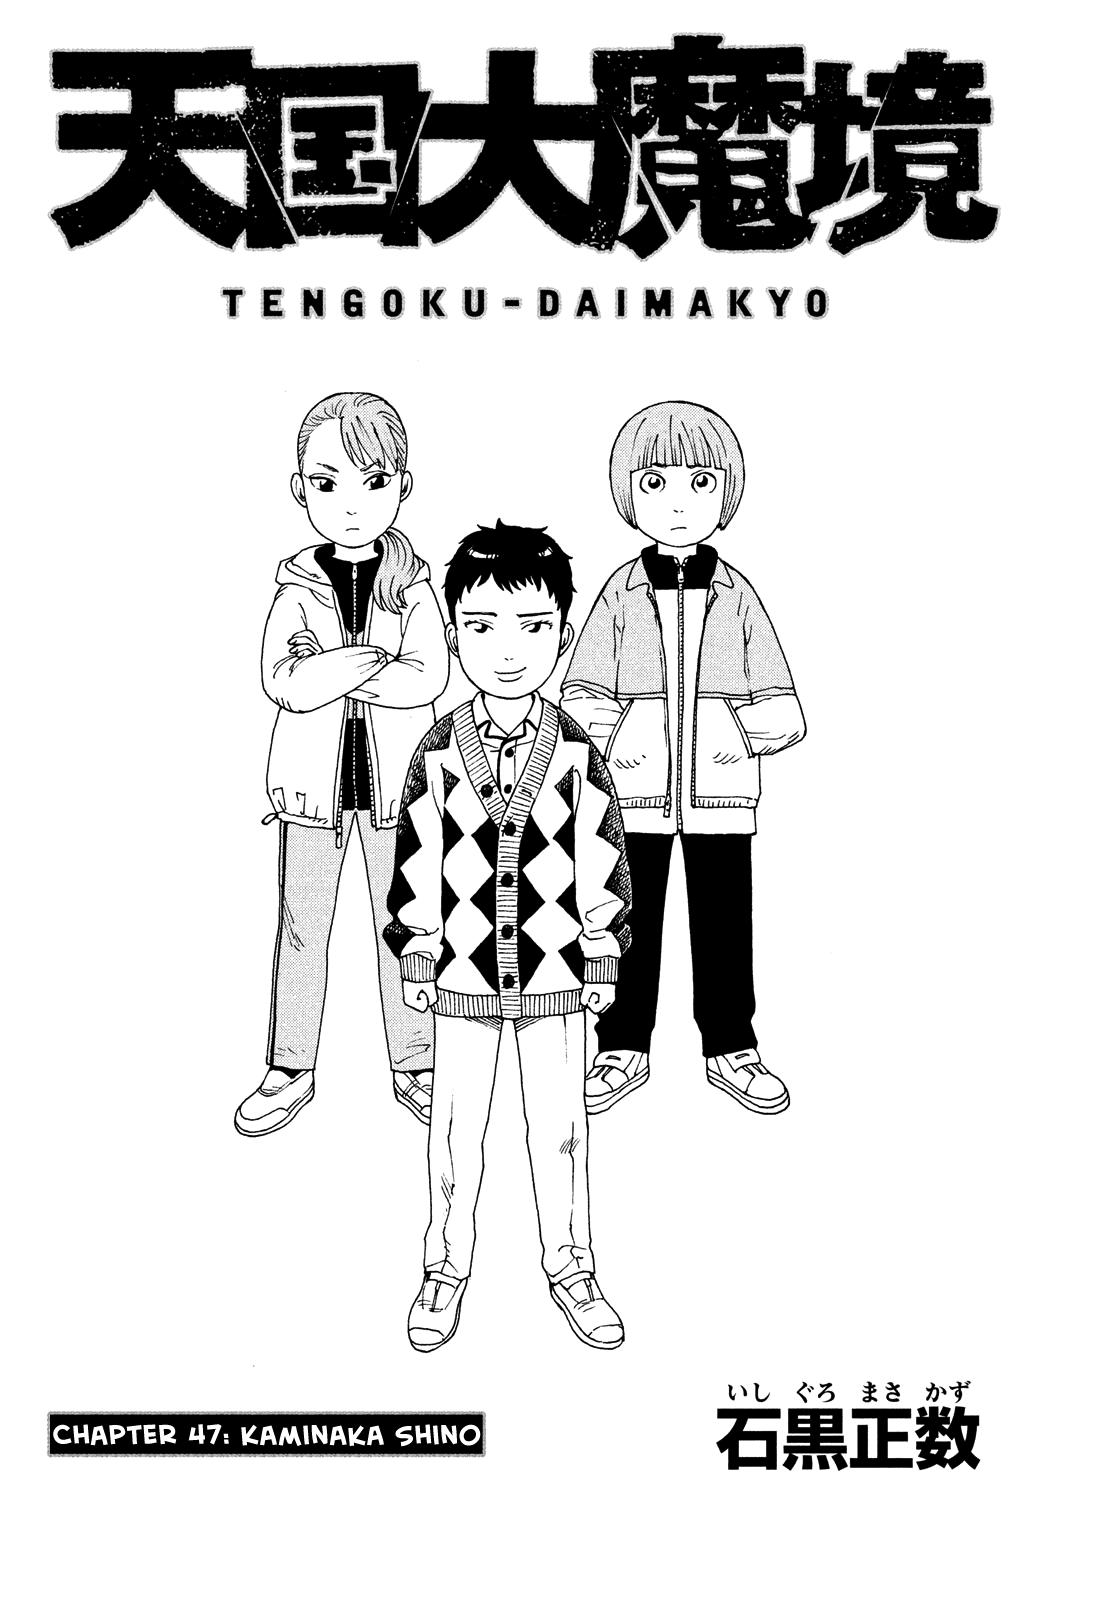 Read Tengoku Daimakyou Vol.9 Chapter 51: Michika ➂ - Manganelo